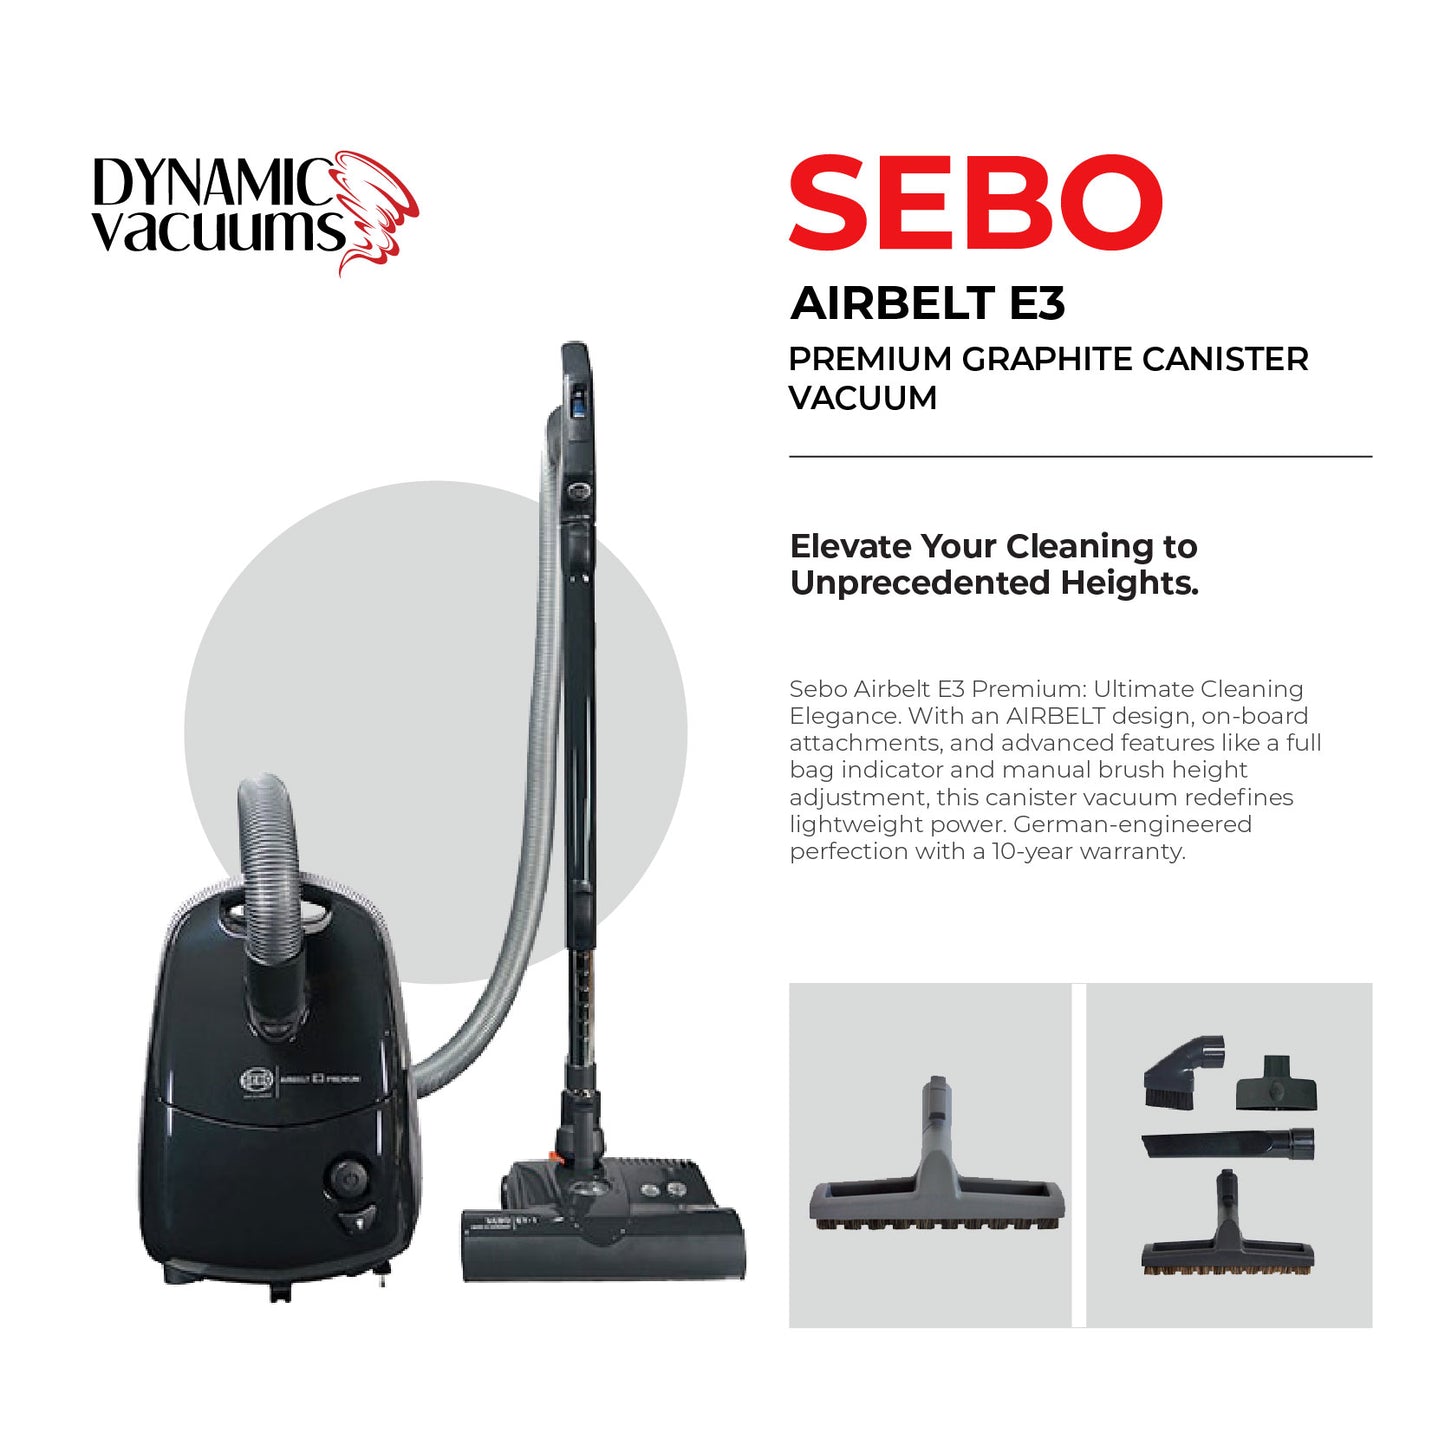 Sebo Airbelt E3 Premium Graphite Canister Vacuum